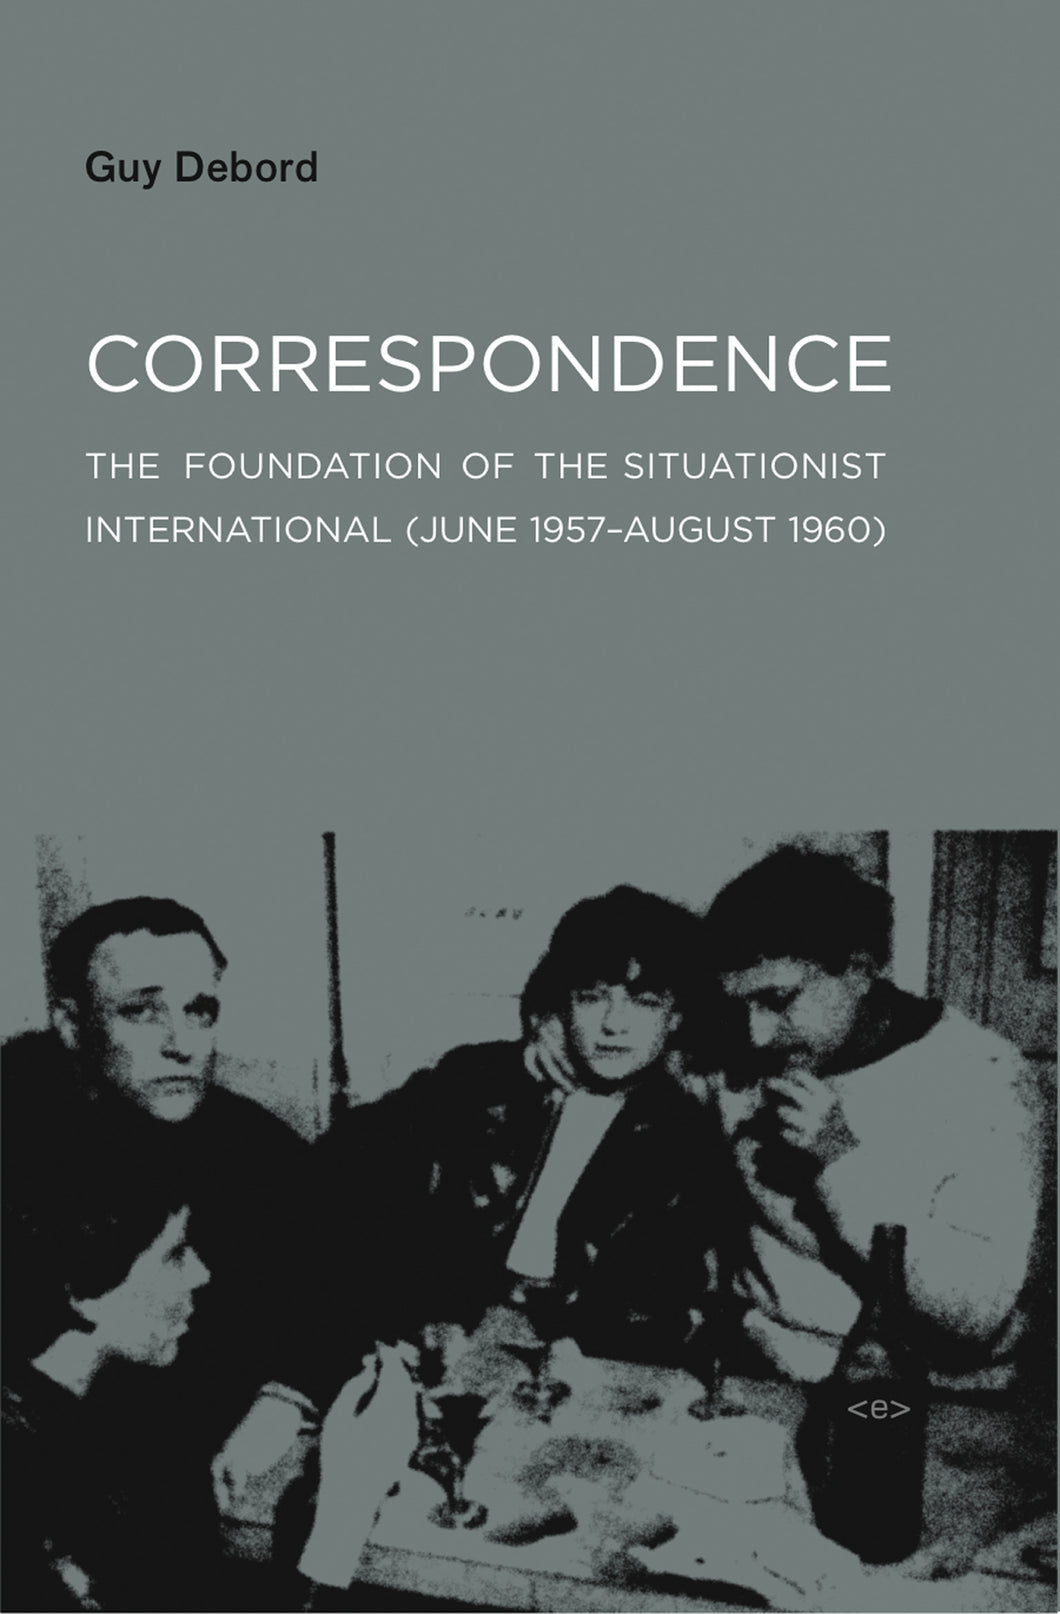 Correspondence : The Foundation of the Situationist International (June 1957-August 1960) ร้านหนังสือและสิ่งของ เป็นร้านหนังสือภาษาอังกฤษหายาก และร้านกาแฟ หรือ บุ๊คคาเฟ่ ตั้งอยู่สุขุมวิท กรุงเทพ